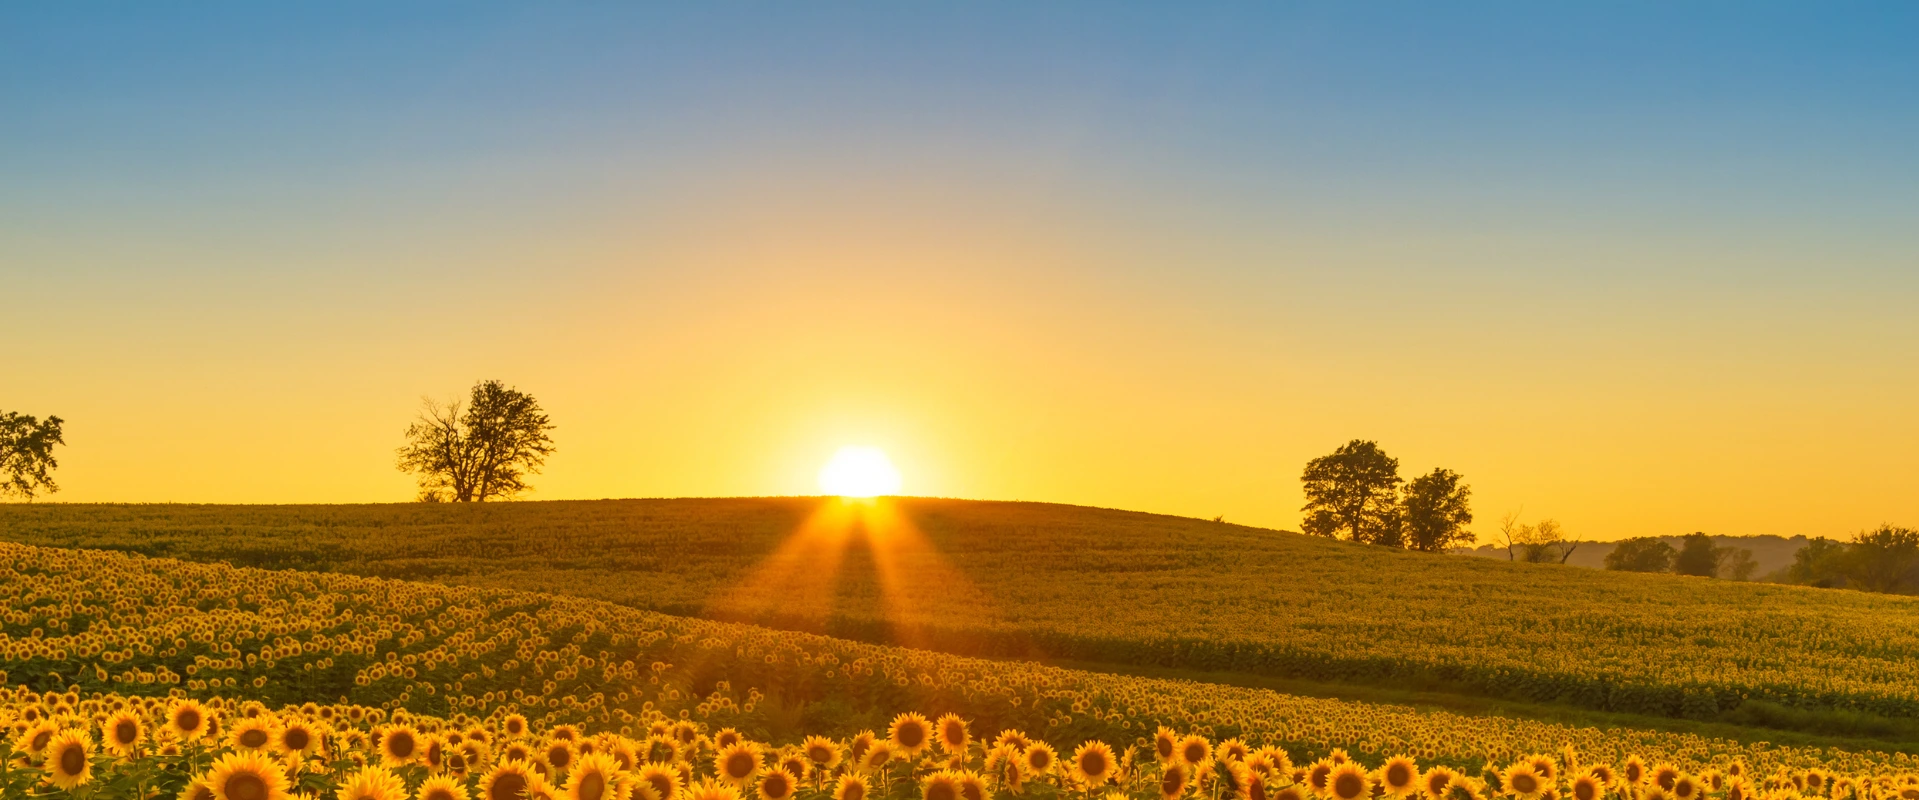 Sunflowers in Kansas field